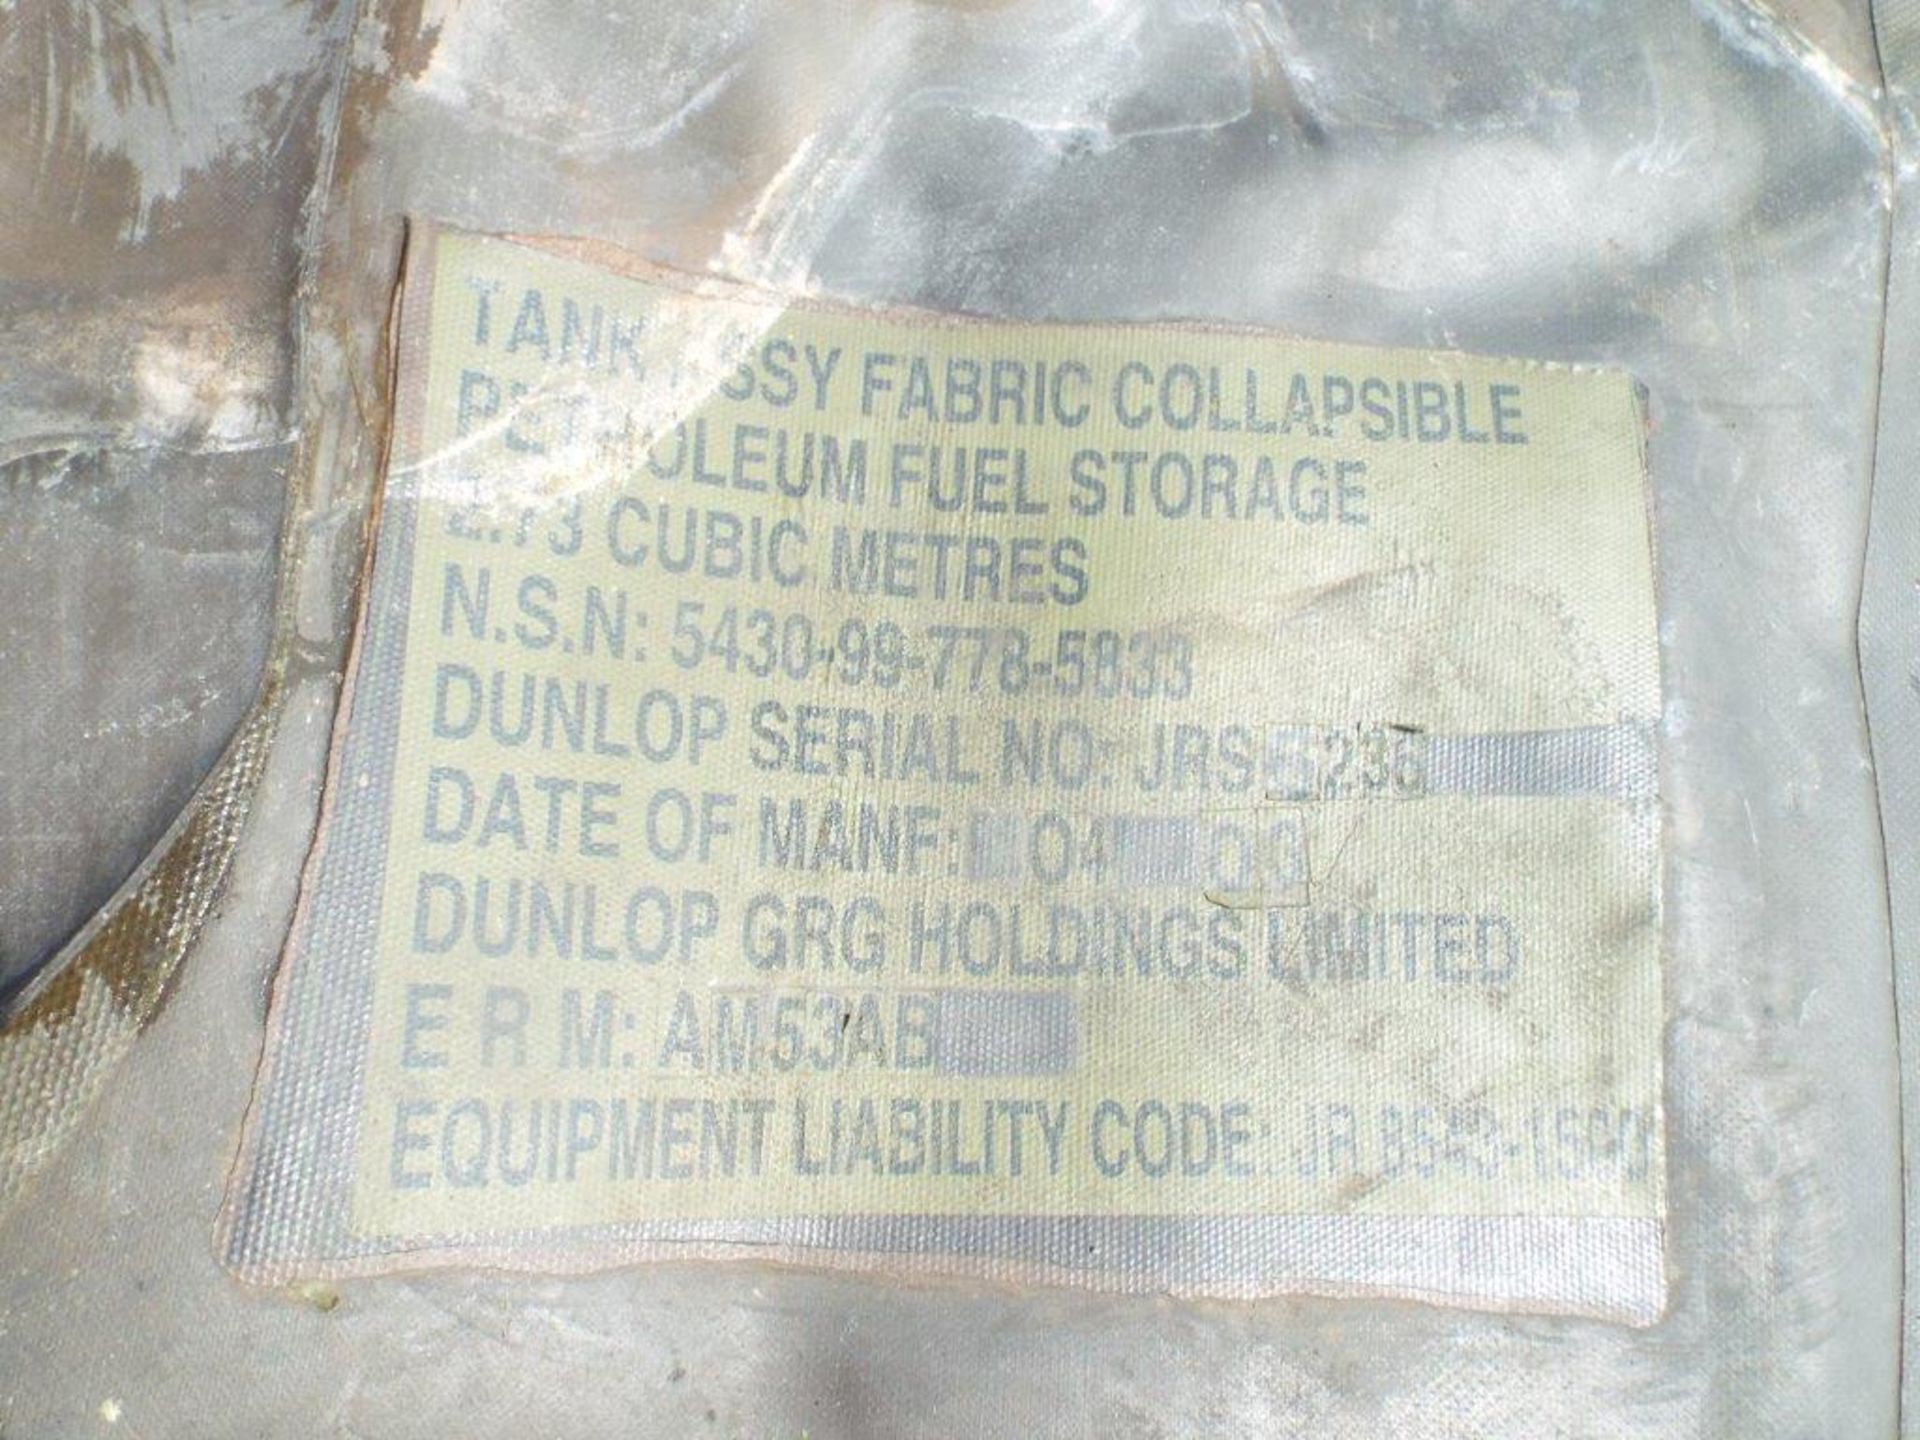 Dunlop 600 Gal Collapsible Fuel/Fluid Storage Bladder - Image 7 of 9